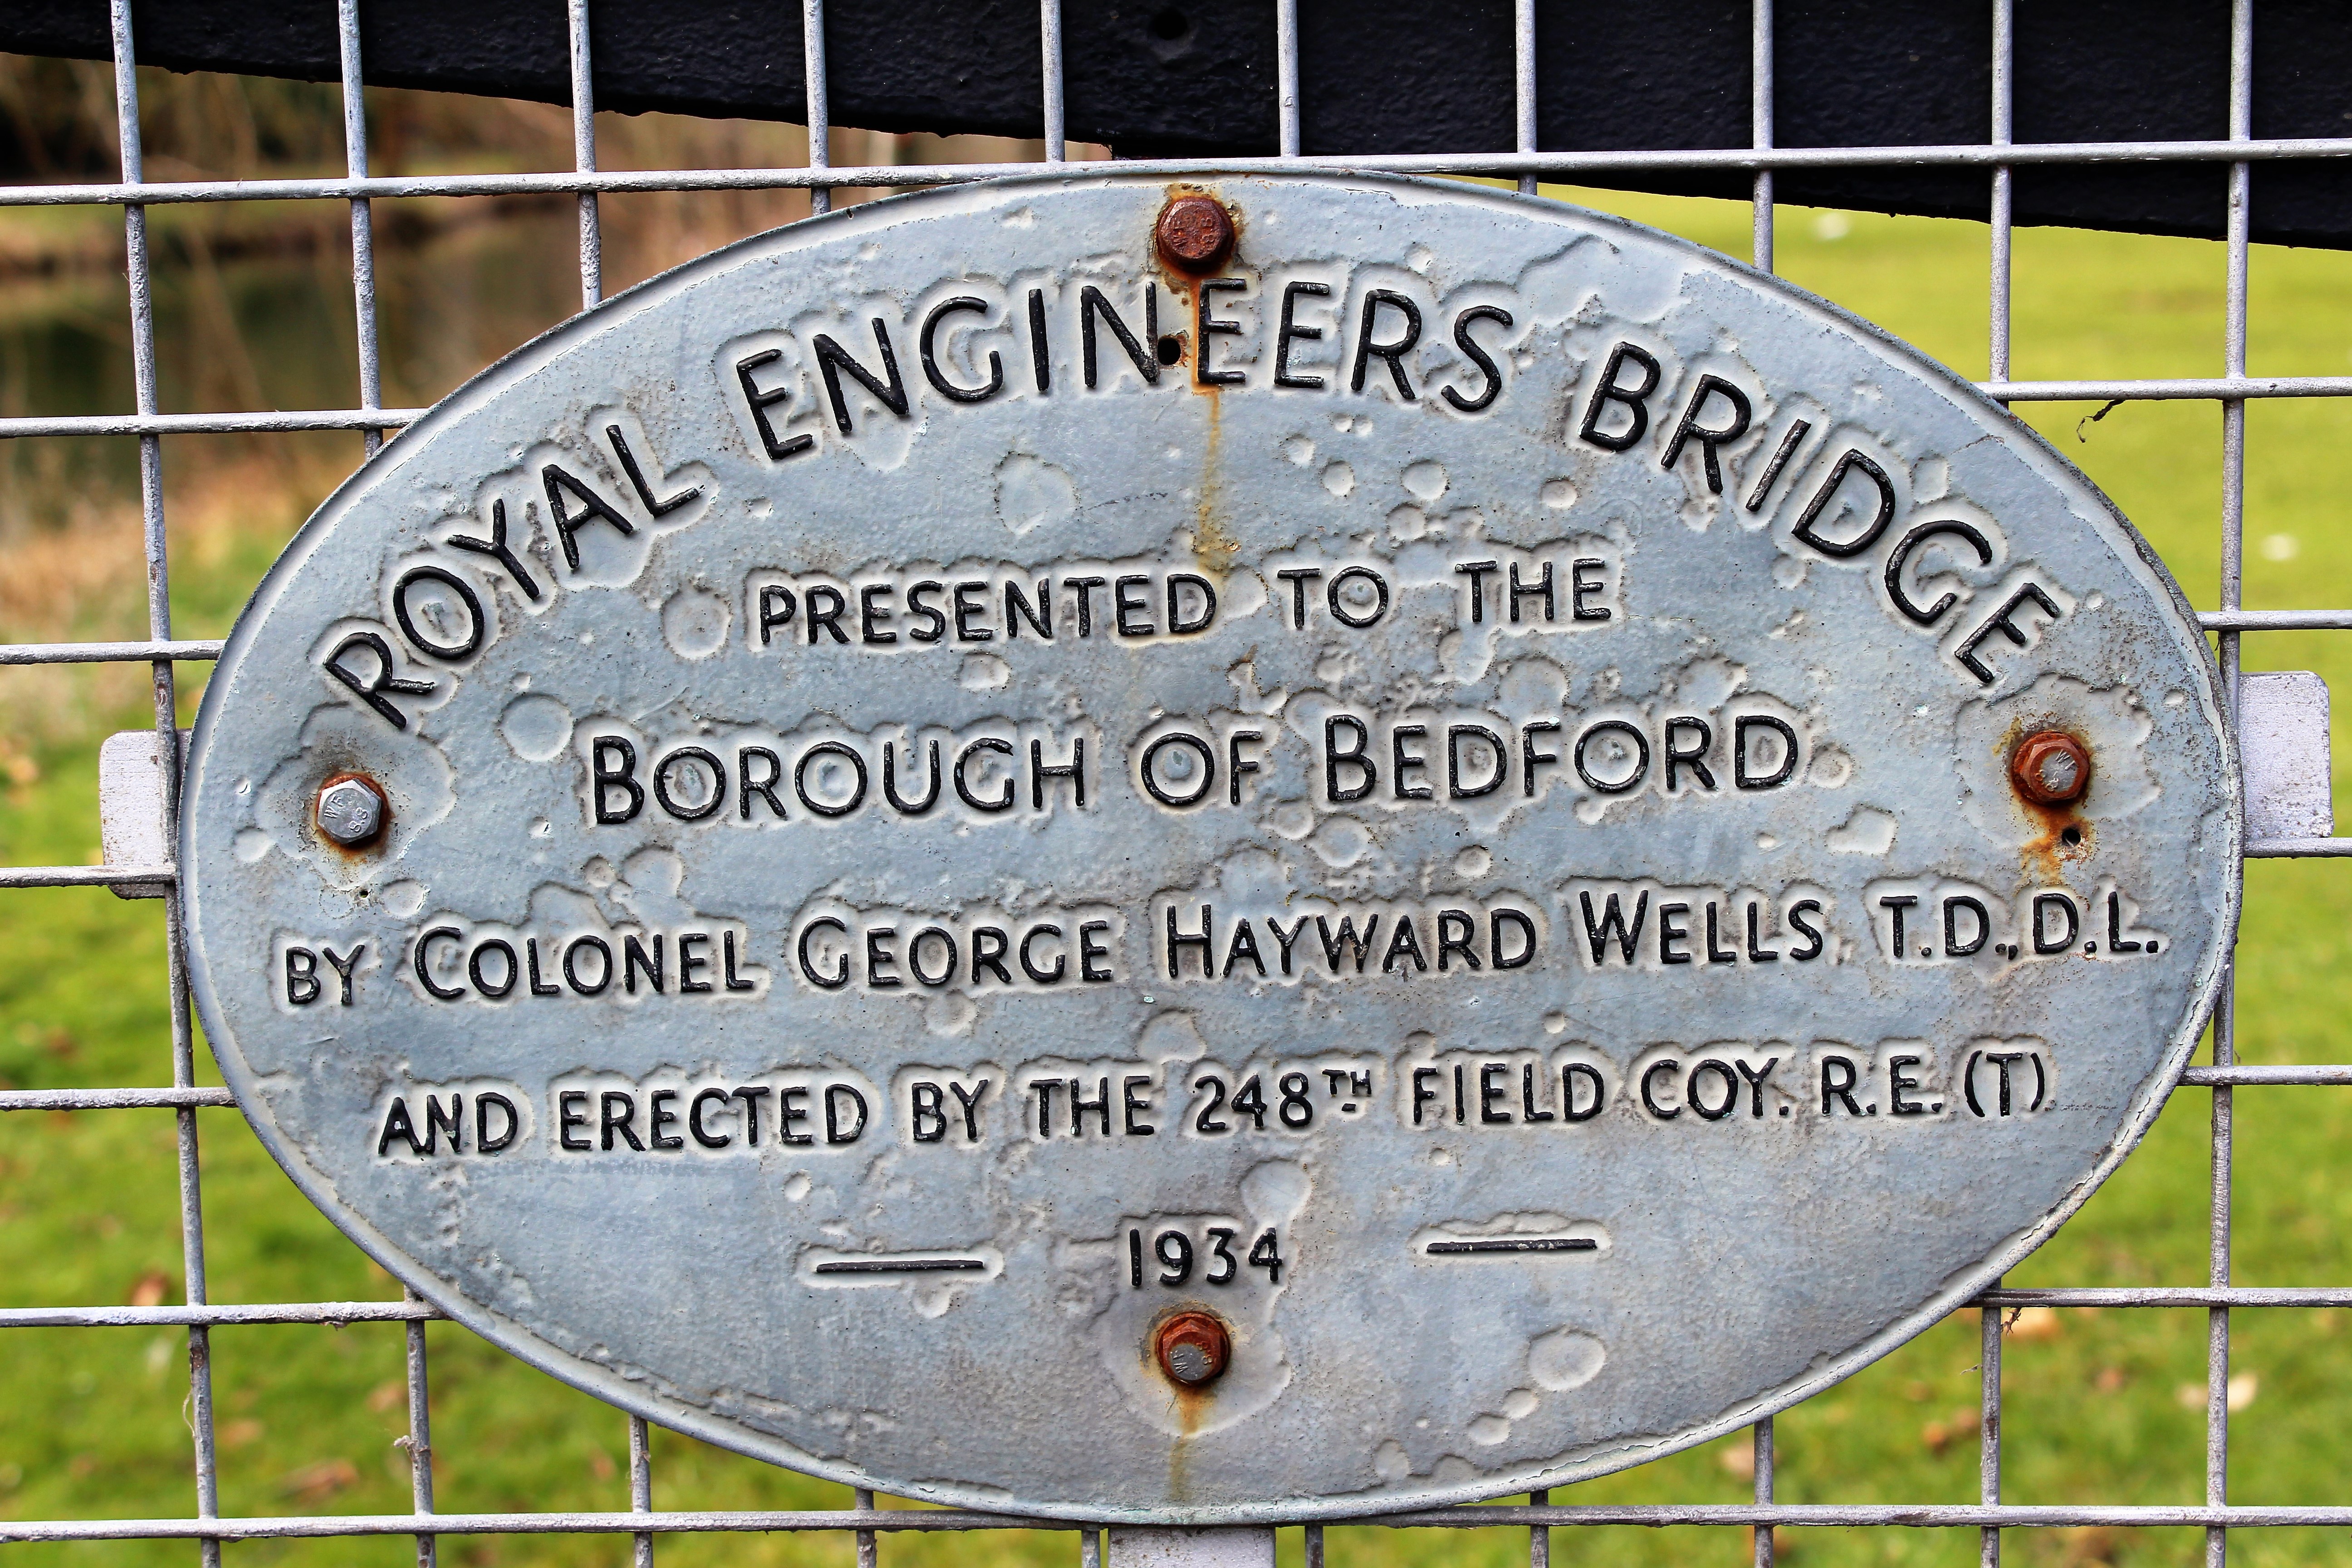 Royal Engineers Bridge commemorative plaque